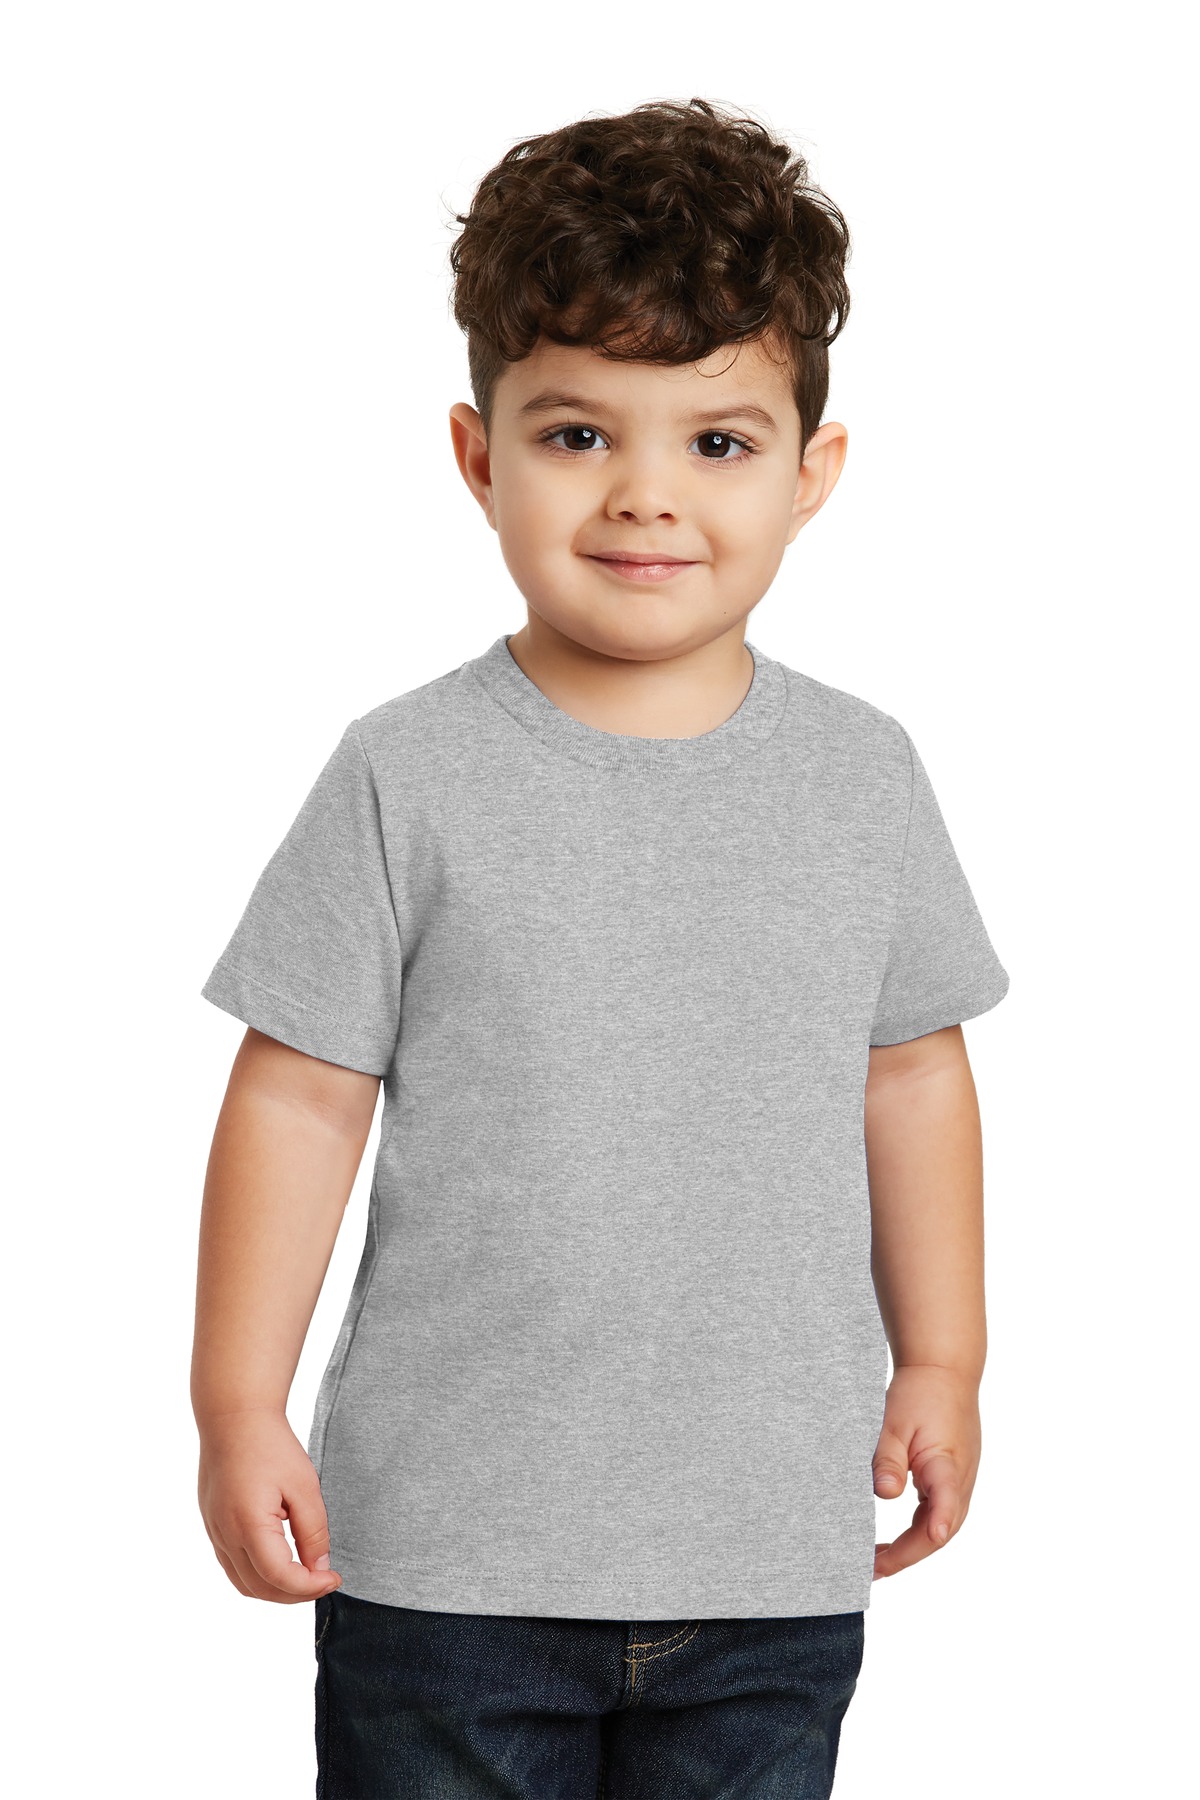 Port & Company Toddler Fan Favorite T-Shirt - PC450TD